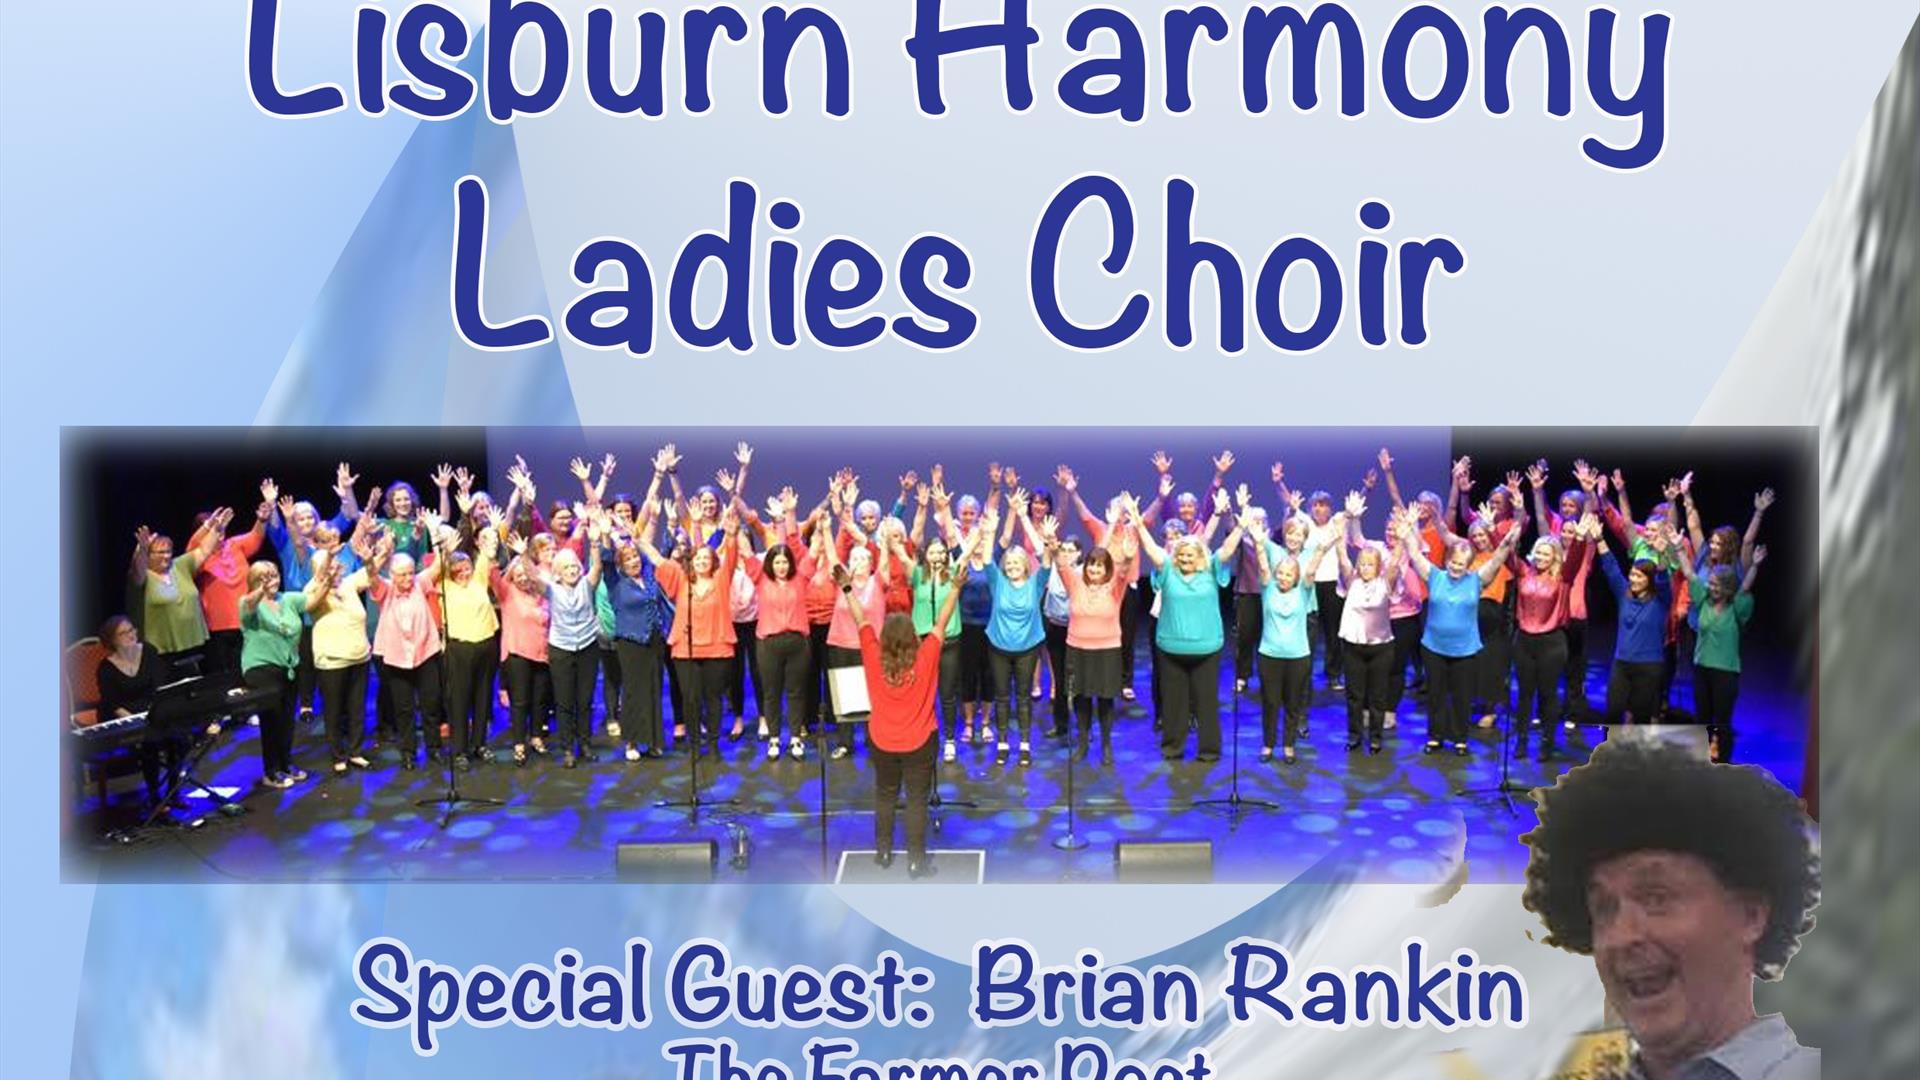 Image is a poster advertising the Lisburn Harmony Ladies Choir Gala Concert at Lagan Valley Island Lisburn